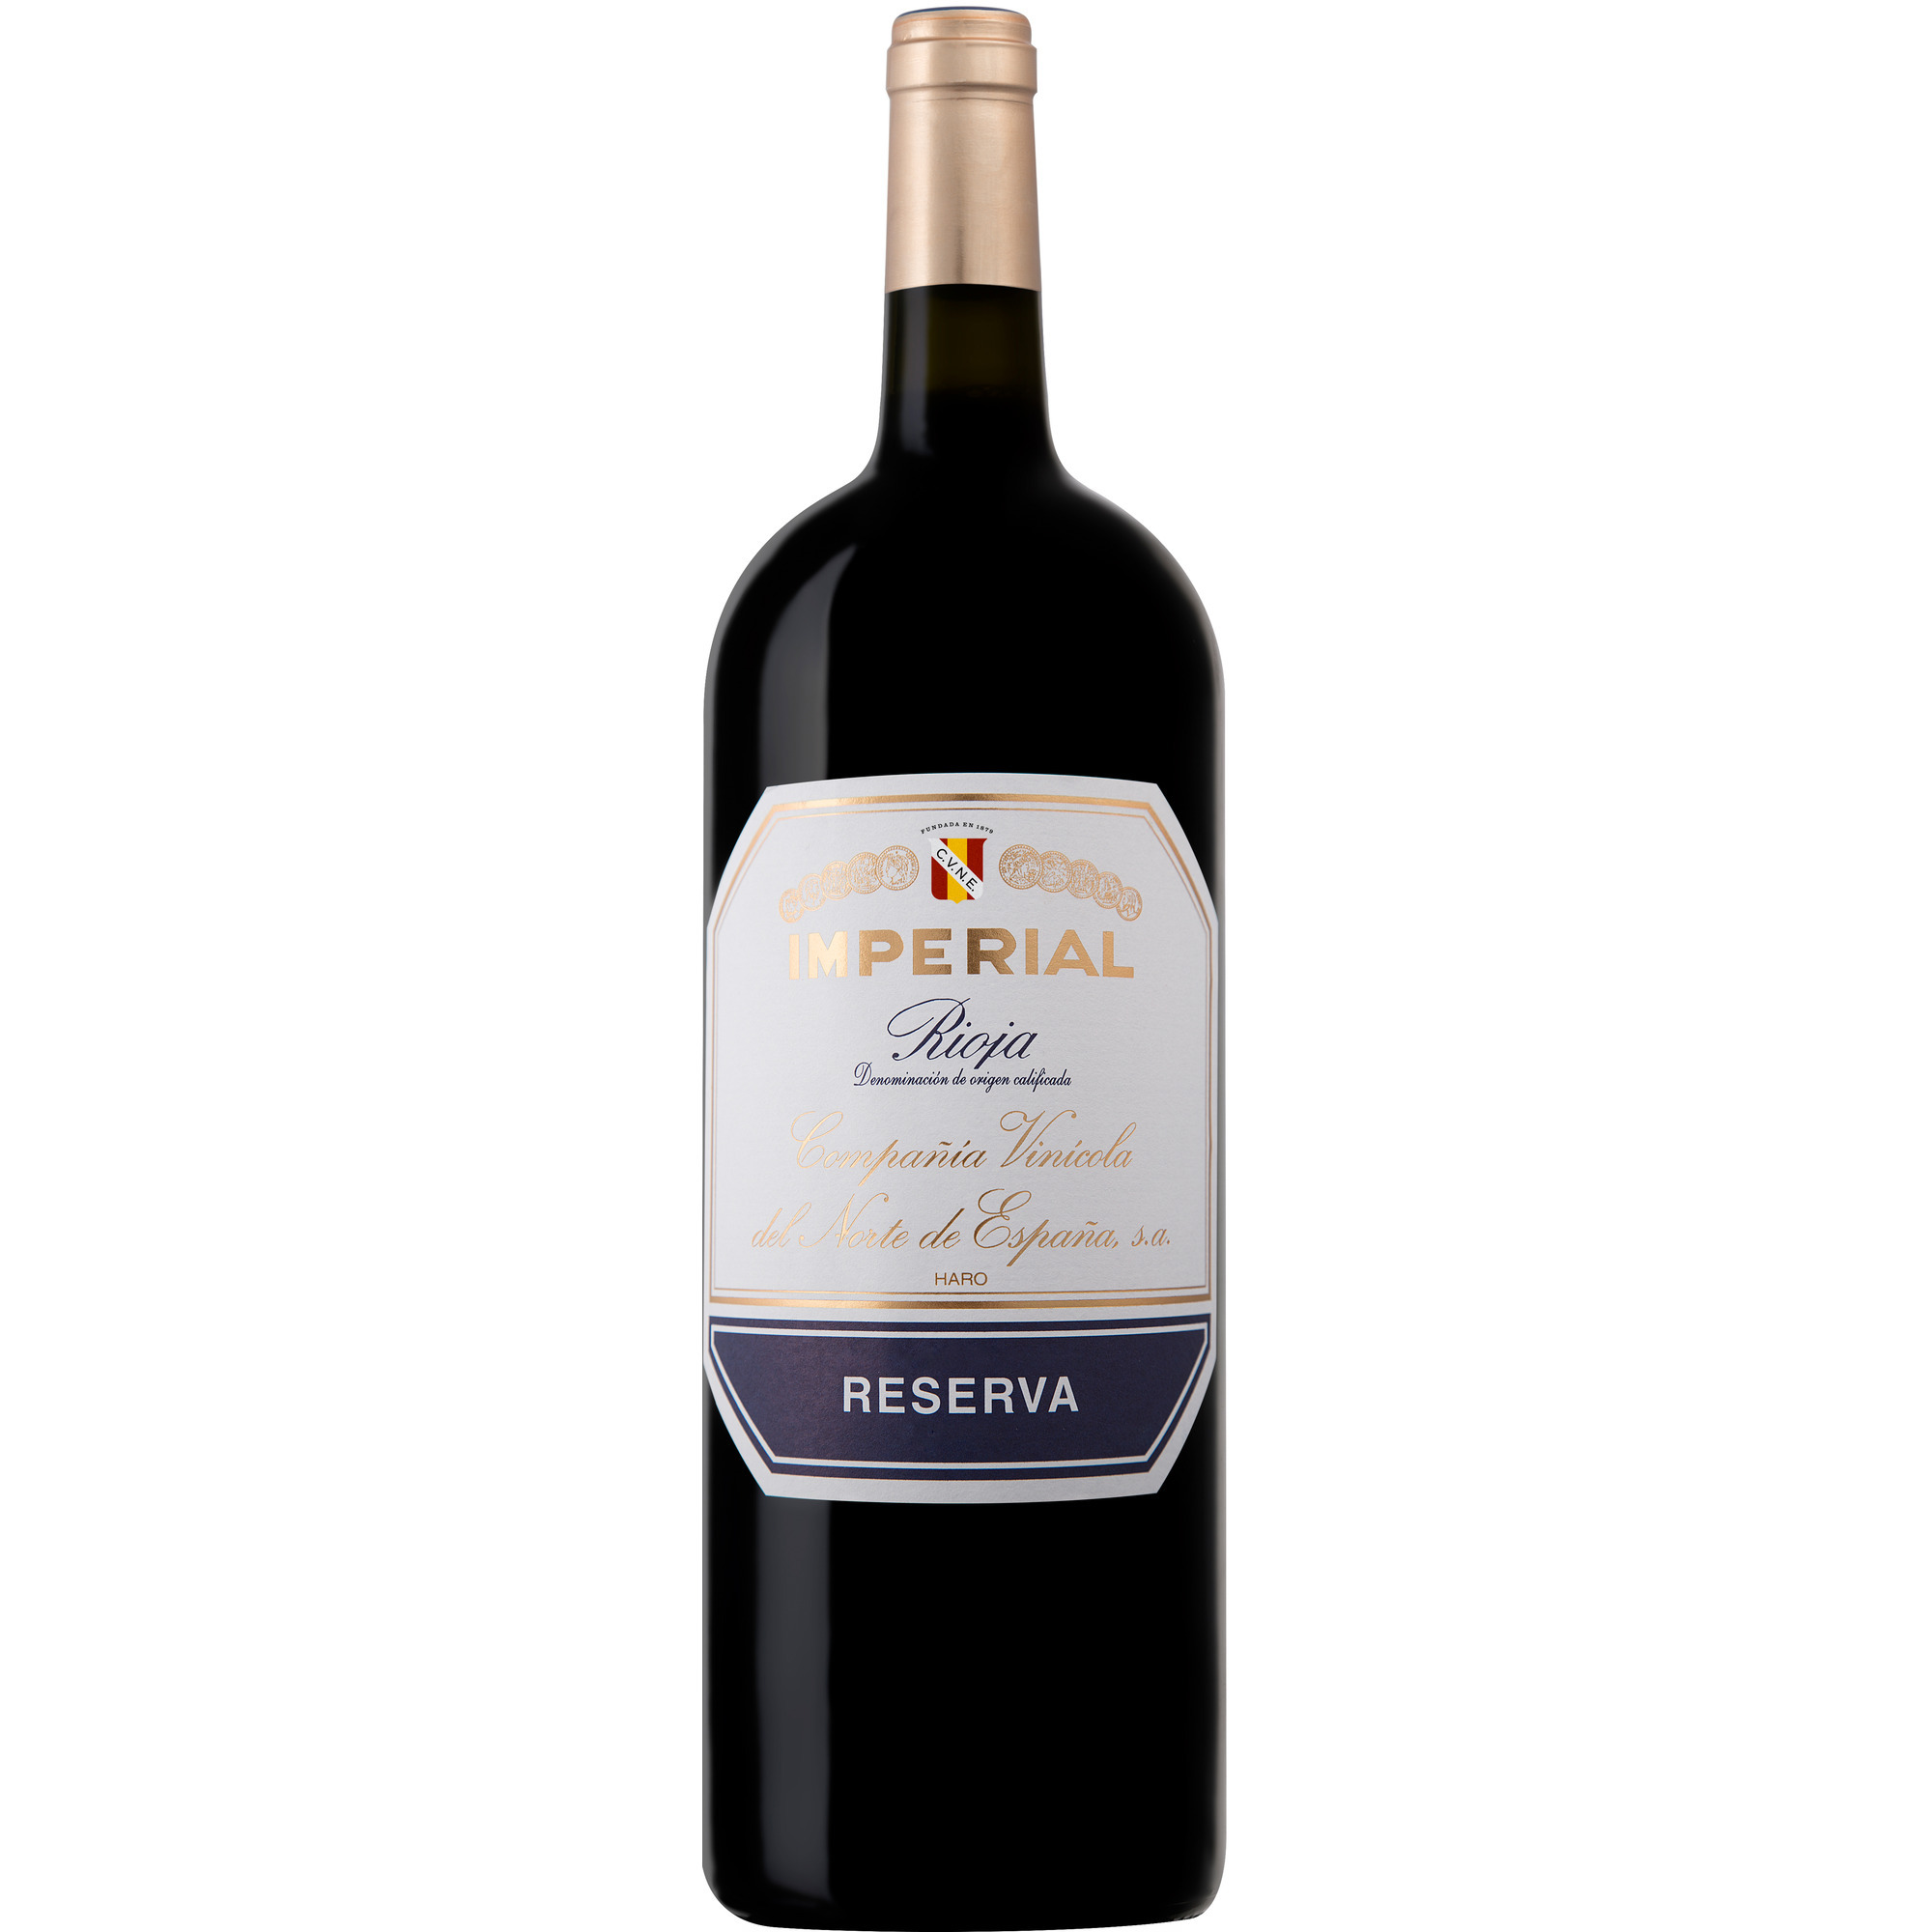 CUNE Rioja Imperial Res. 1,5l, 2015